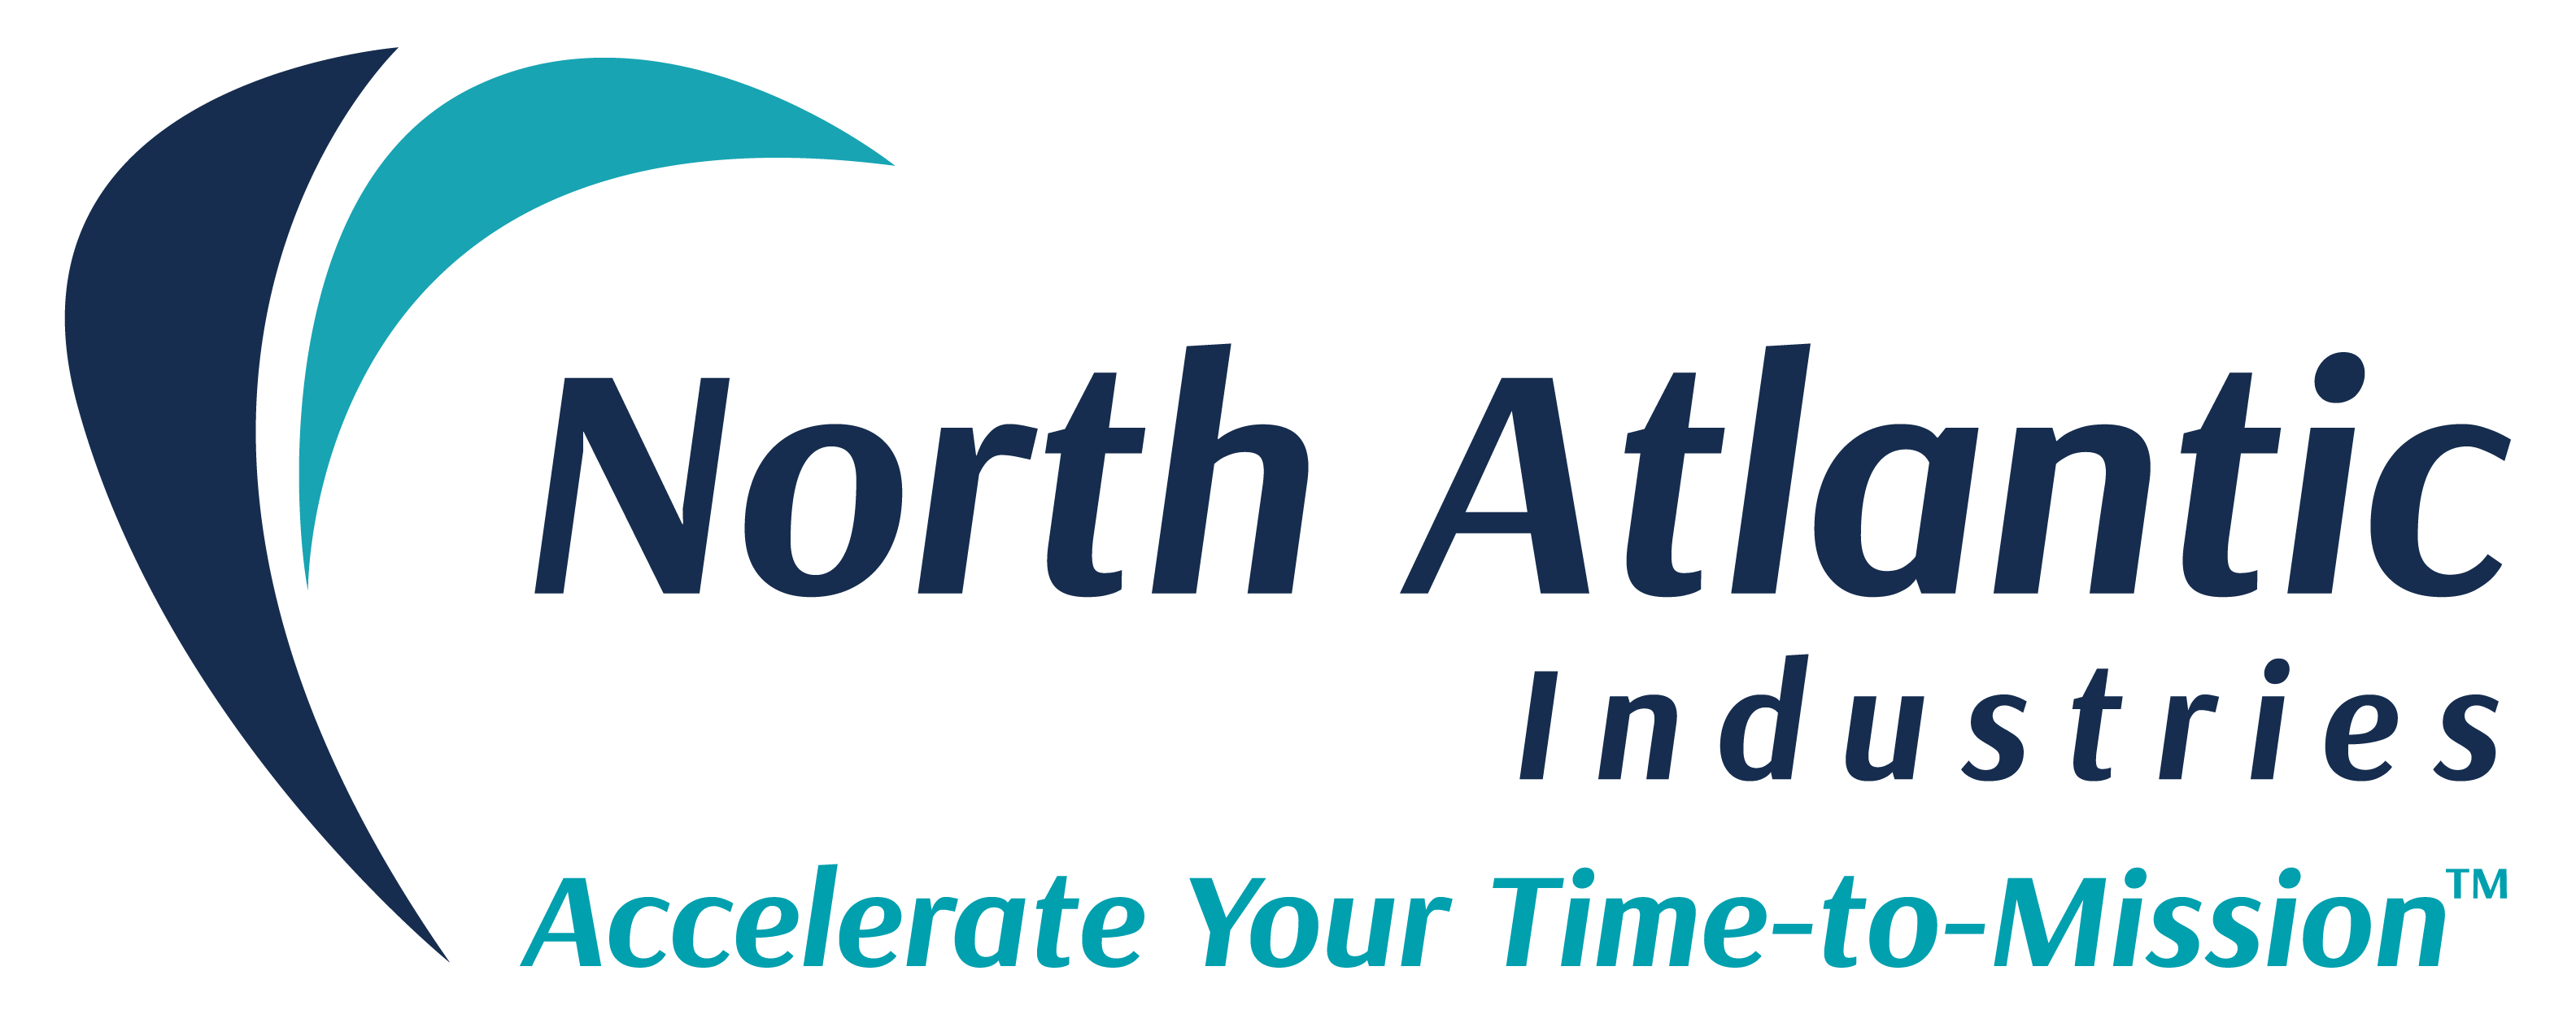 North Atlantic Industries logo